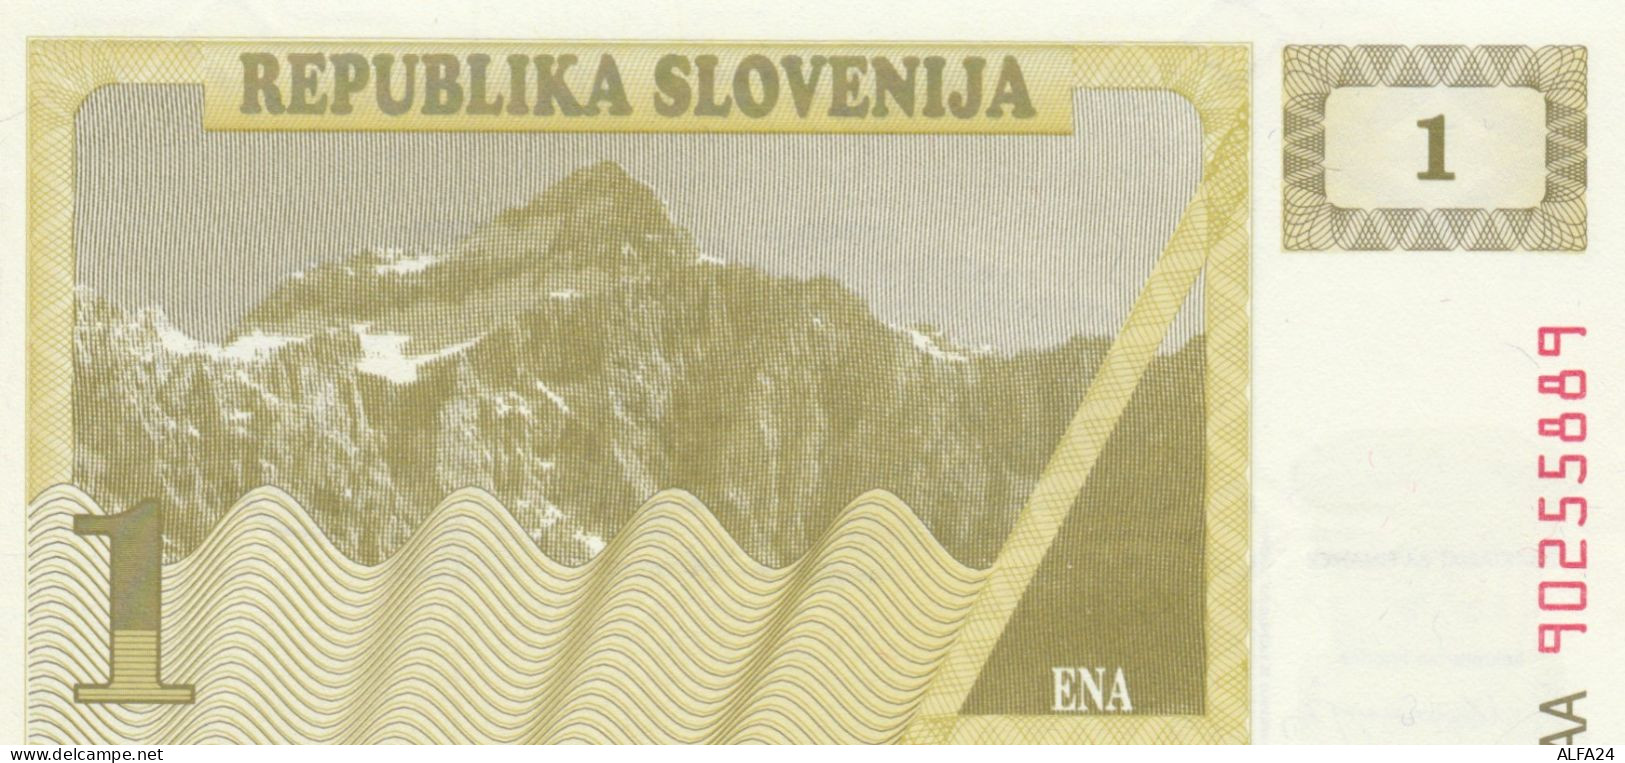 BANCONOTA SLOVENIA 1 UNC (MK745 - Eslovenia